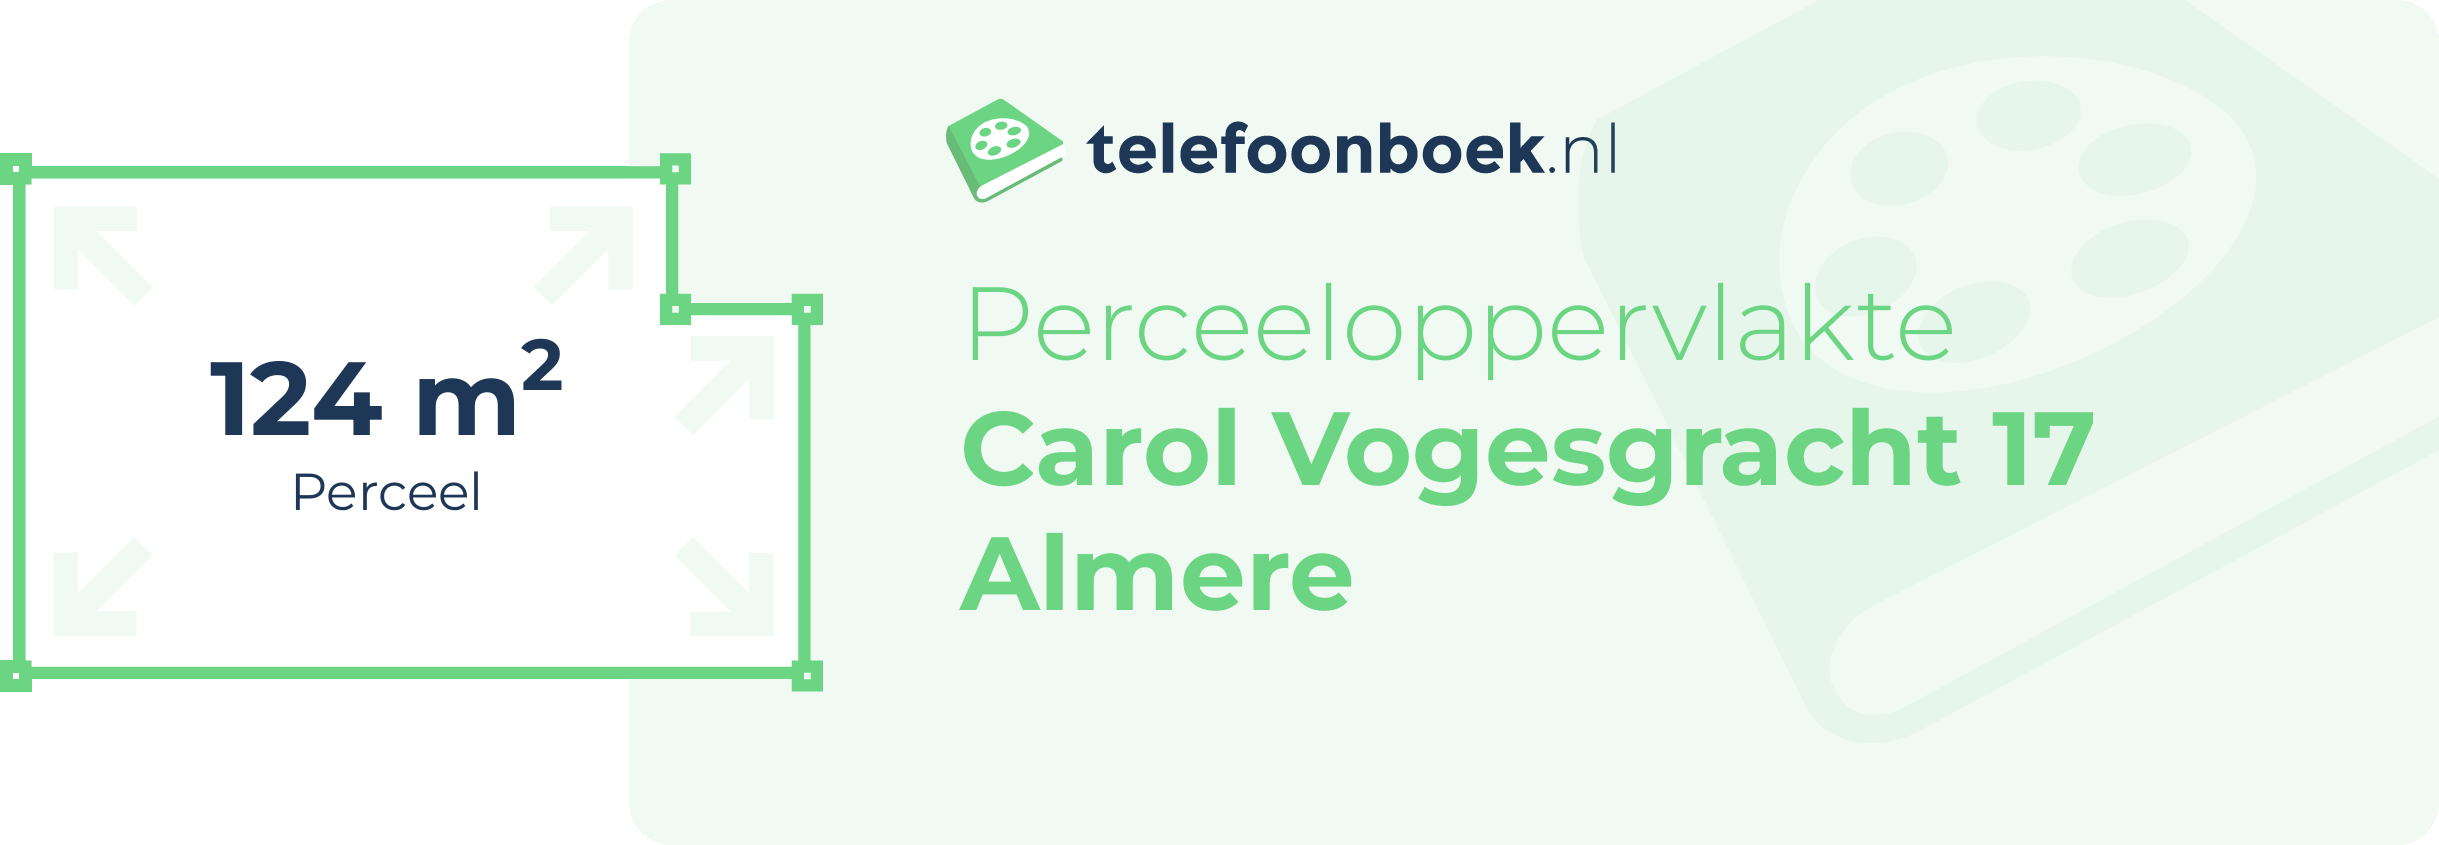 Perceeloppervlakte Carol Vogesgracht 17 Almere